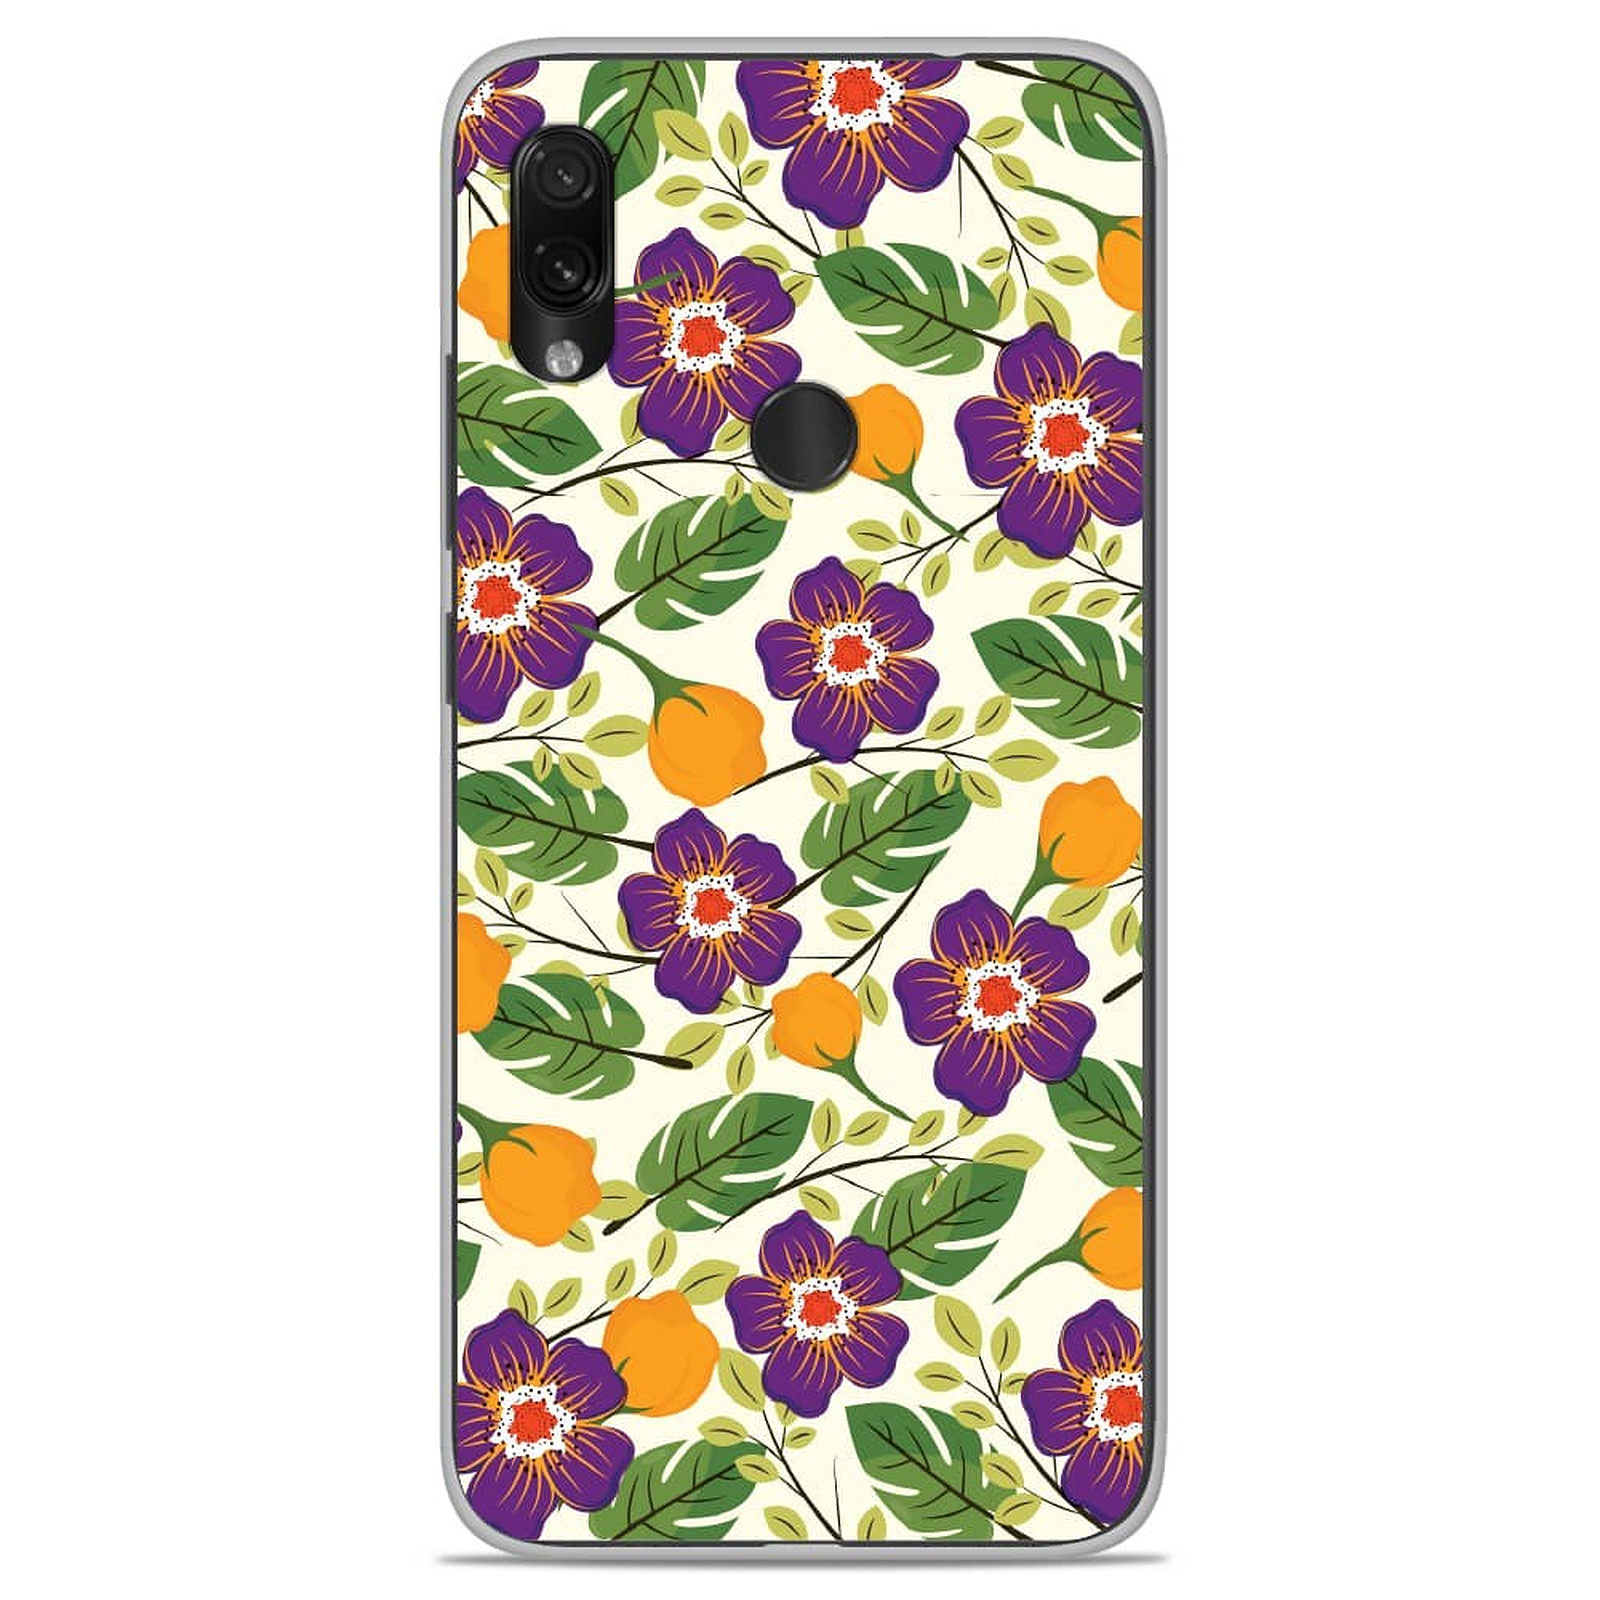 1001 Coques Coque silicone gel Xiaomi Redmi Note 7 / Note 7 Pro motif Fleurs Violettes - Coque telephone 1001Coques